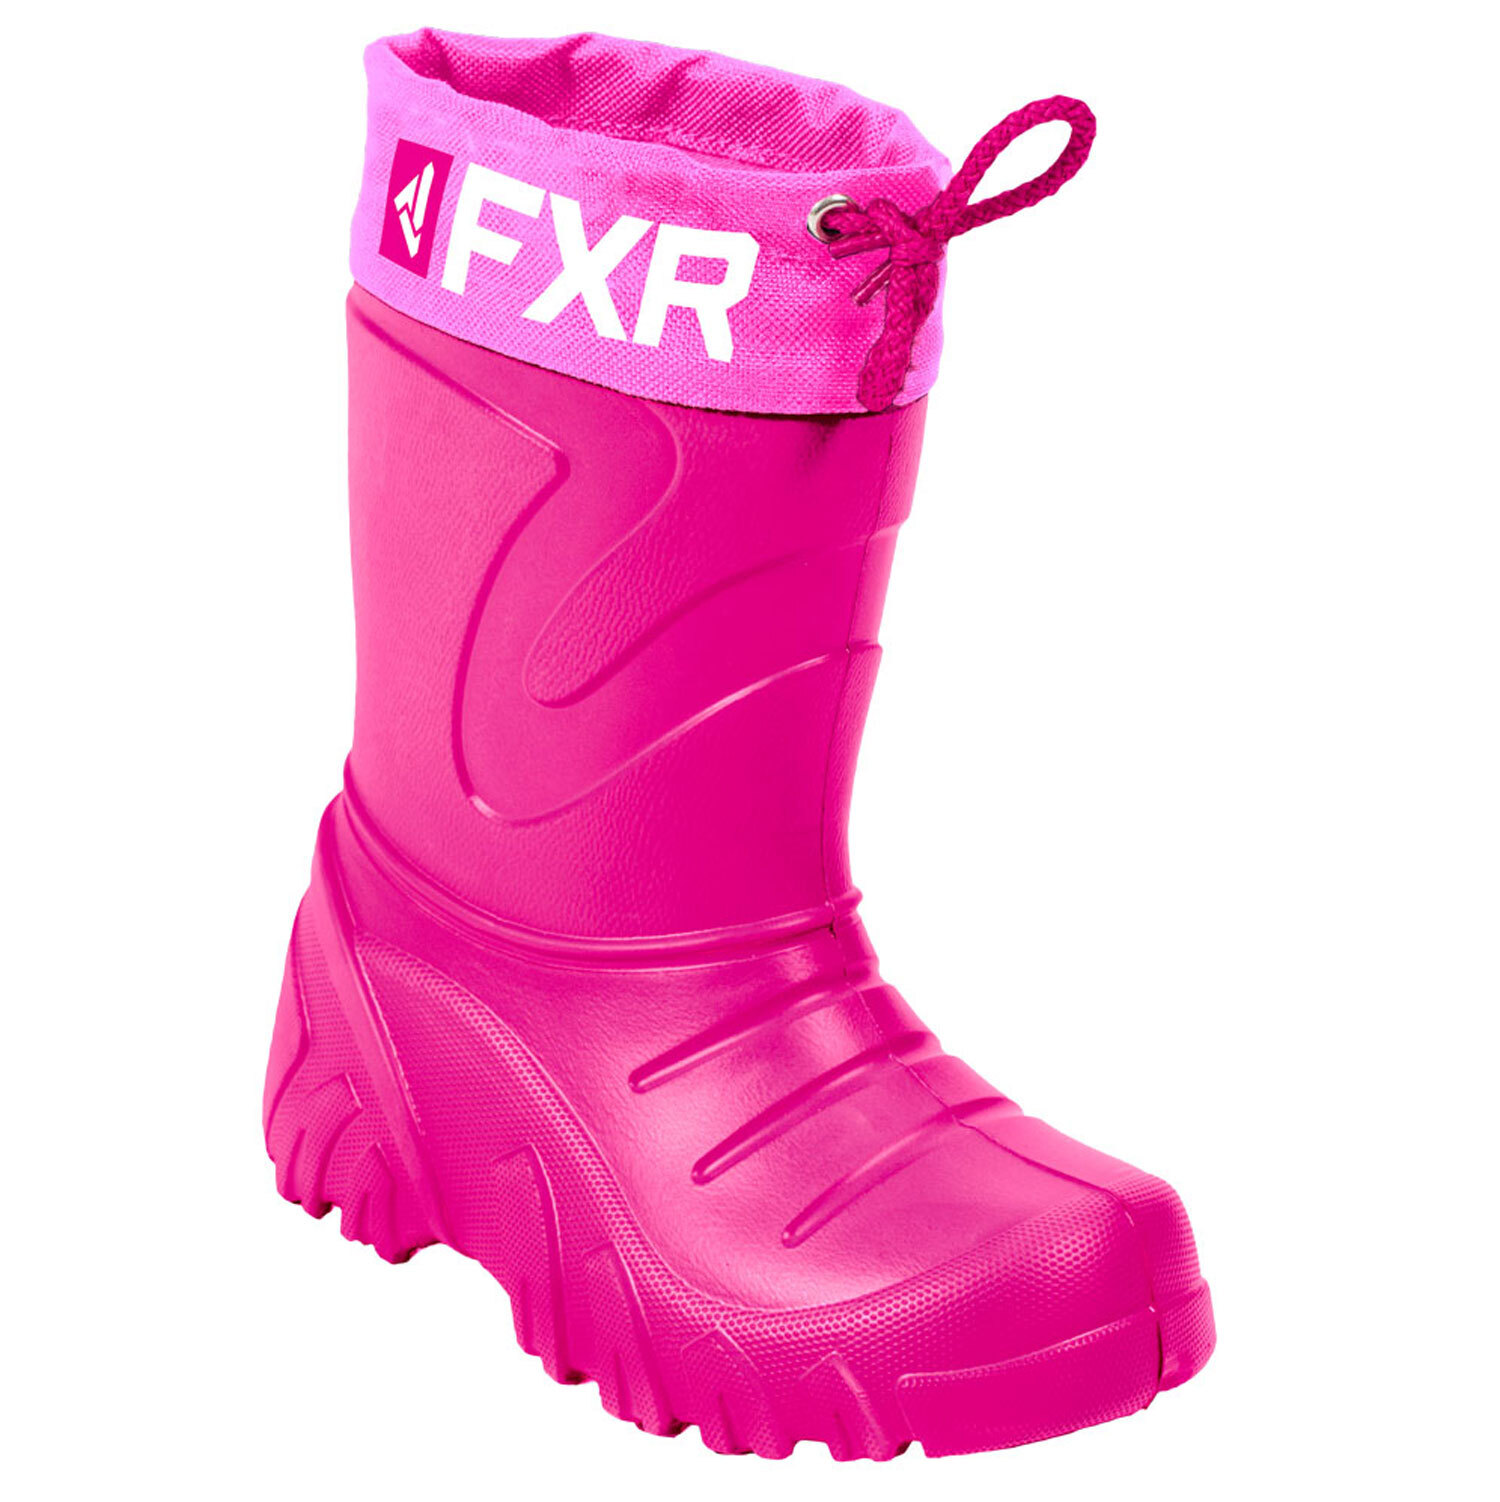 Youth FXR® Svalbard Boots Size 4/5 fuchsia